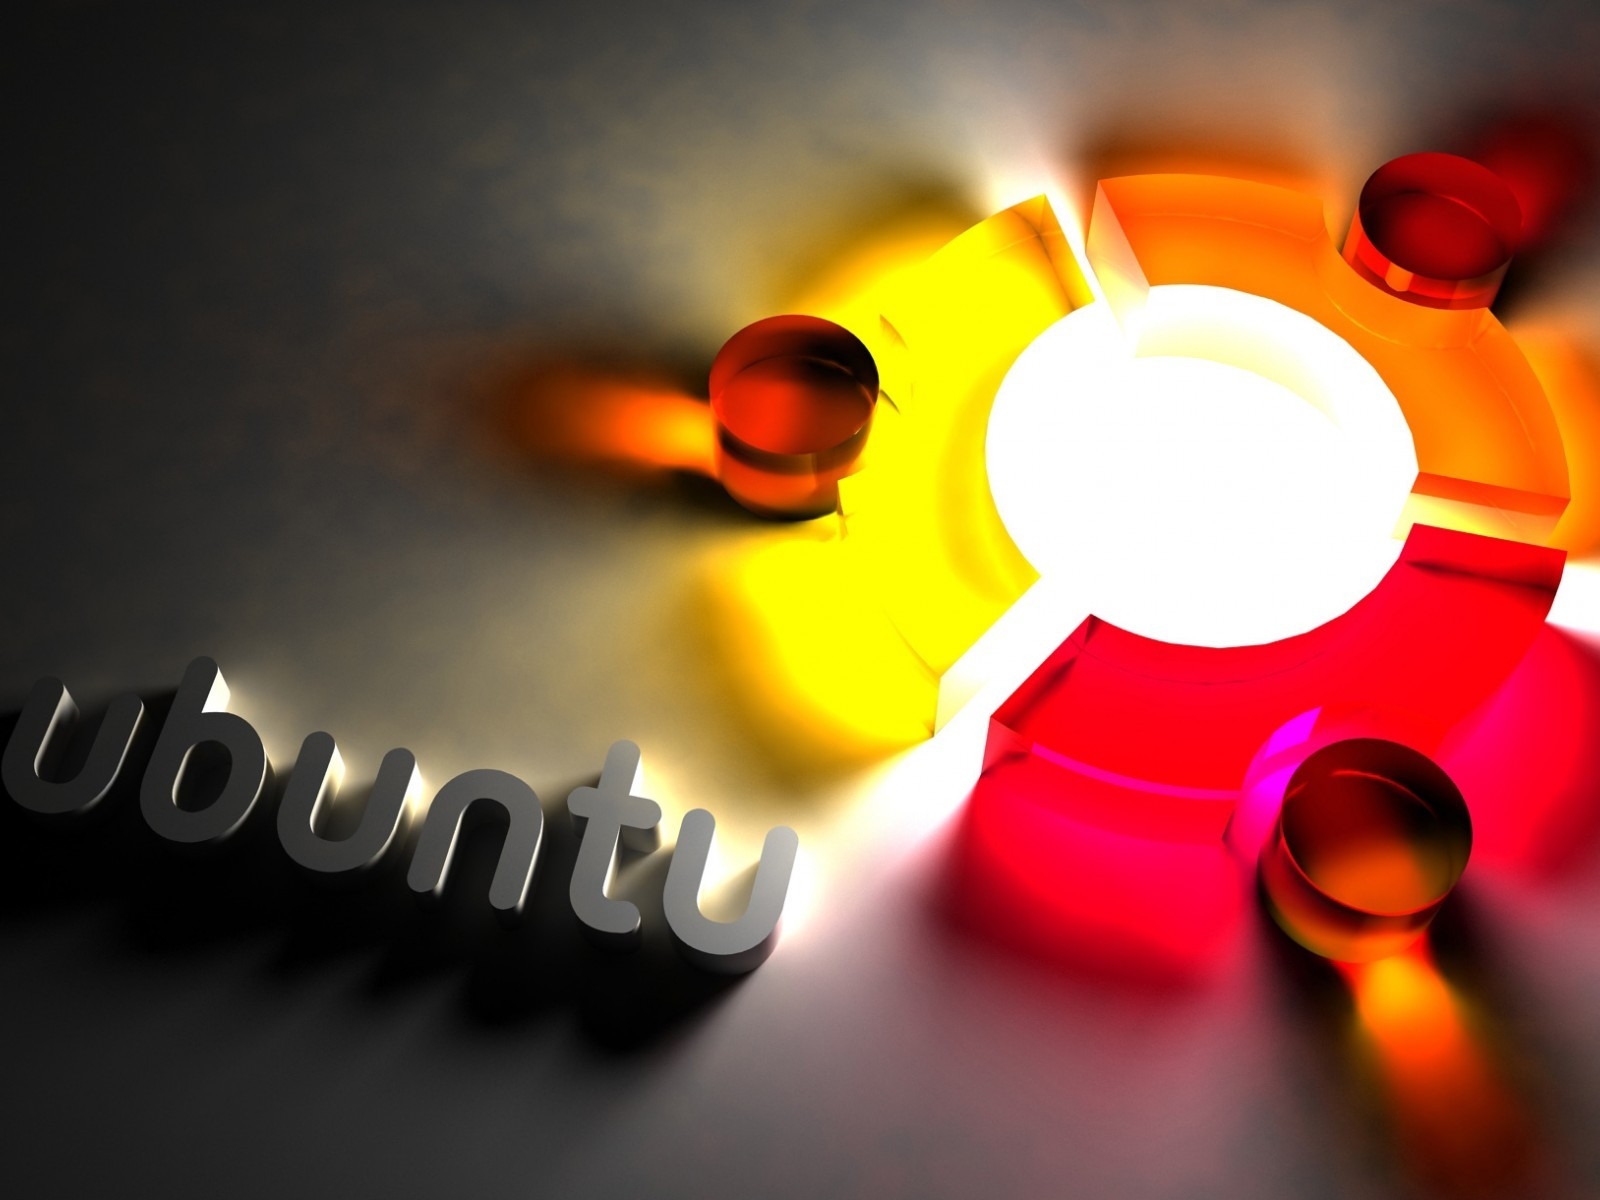 Ubuntu Cool Logo for 1600 x 1200 resolution